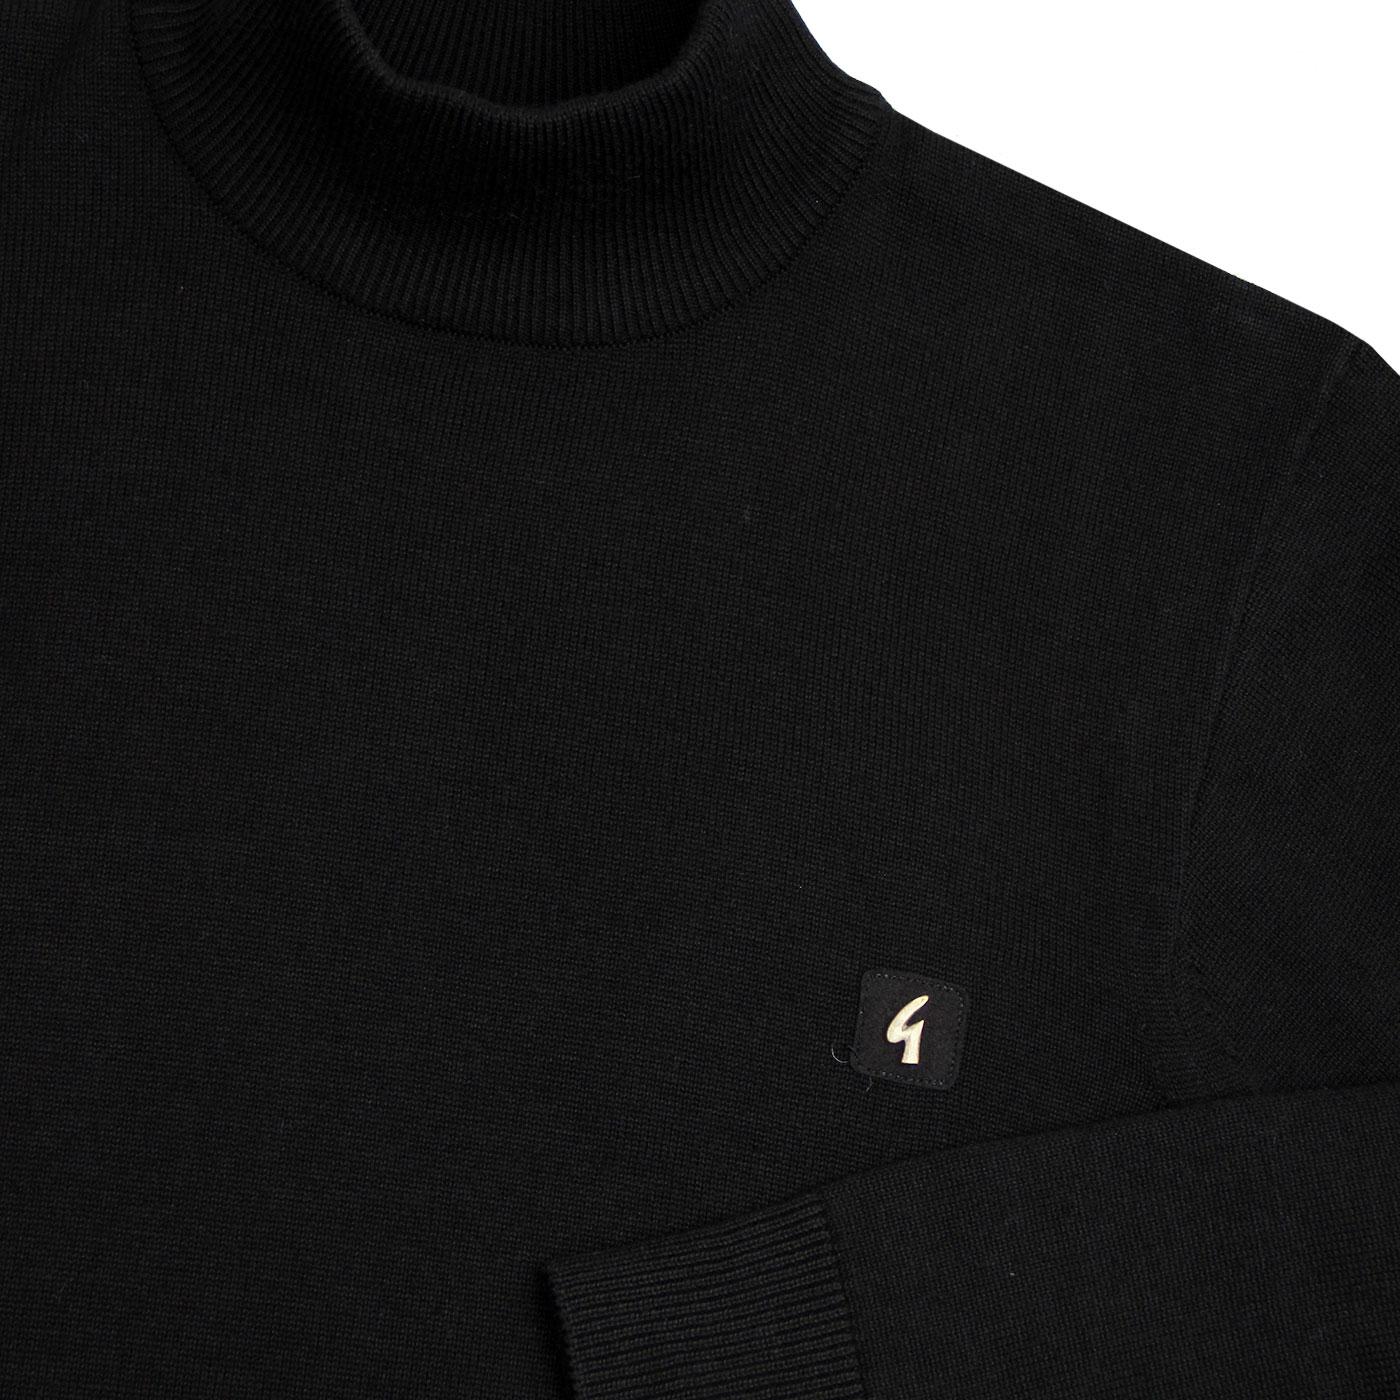 pullover Gabicci Vintage Roll Neck Jumper in Black cotton knit sweater 